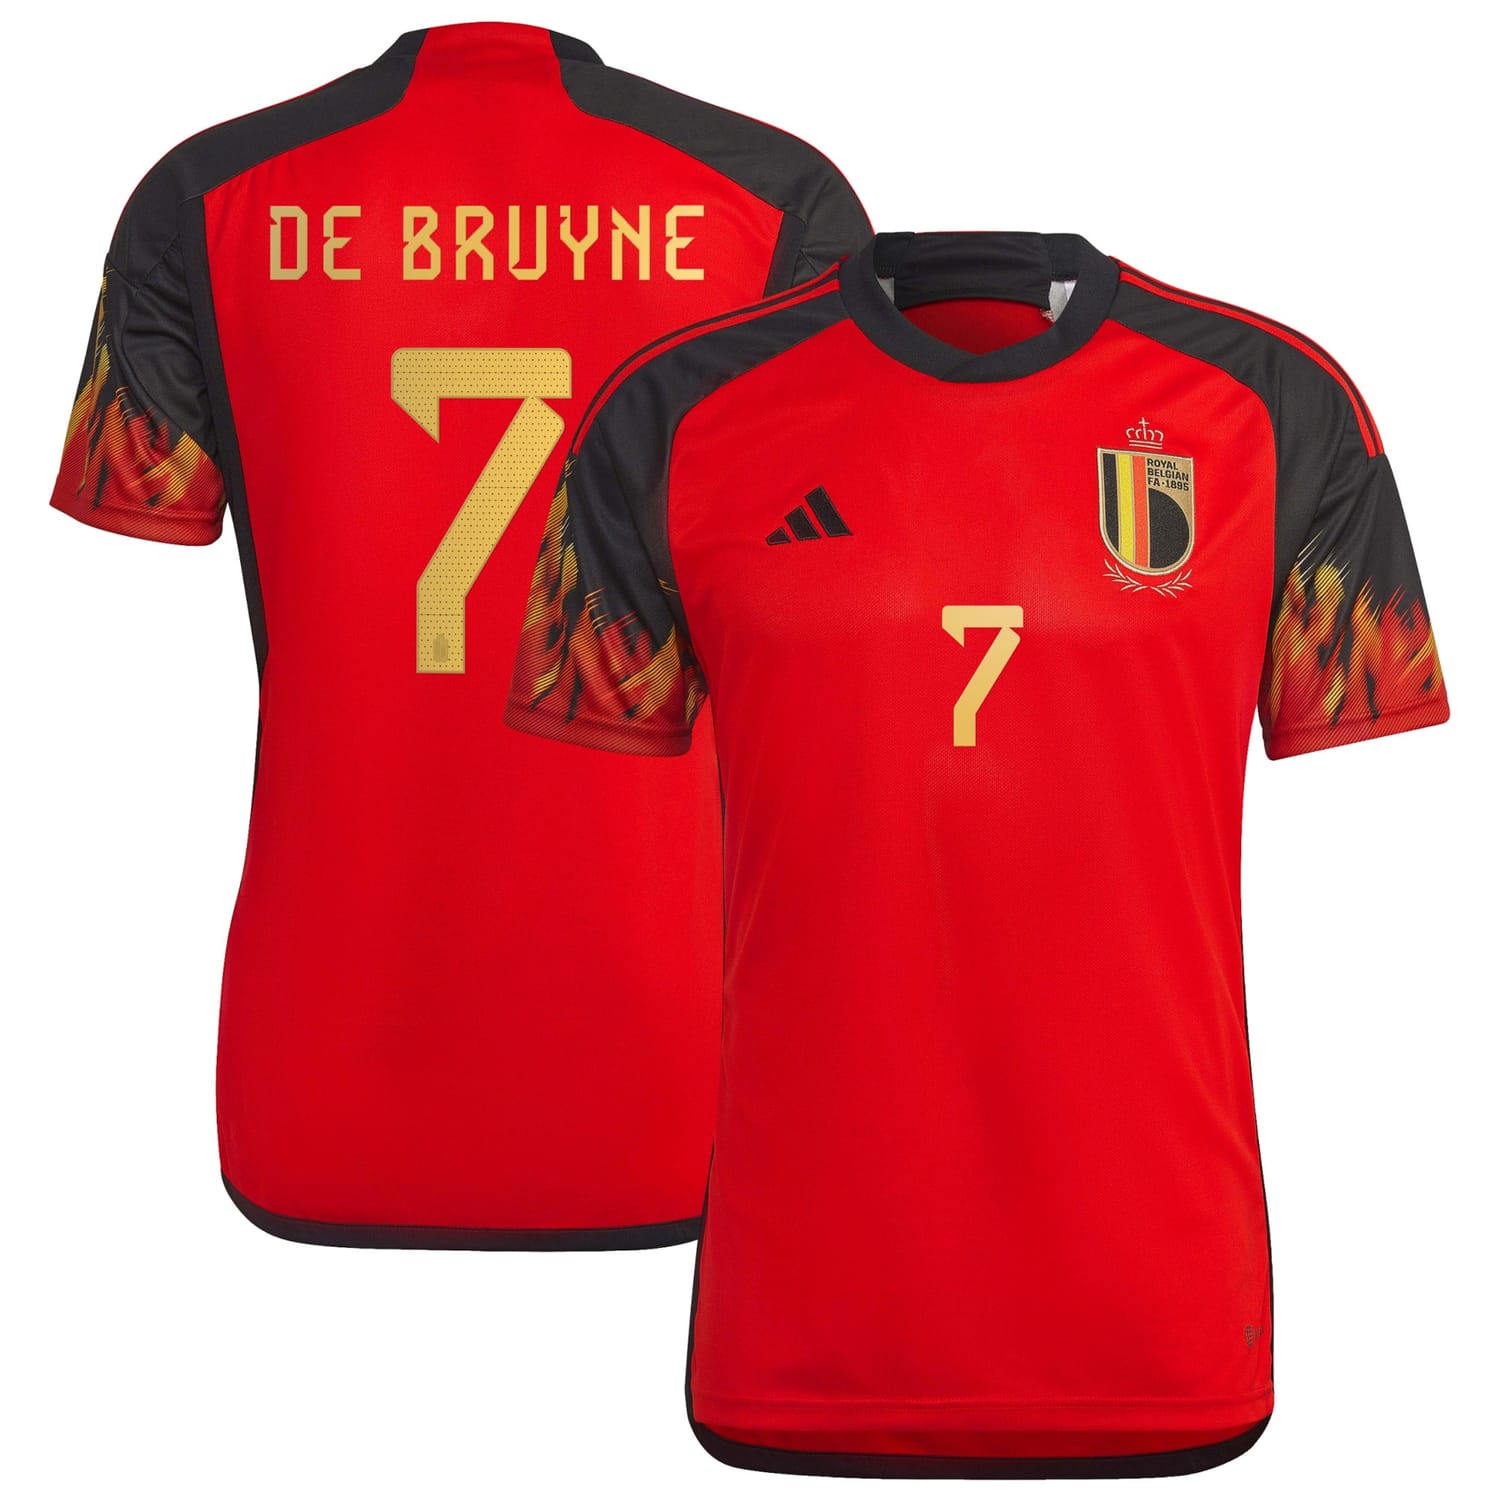 Belgium National Team Home Jersey Shirt player Kevin De Bruyne 7 printing for Men